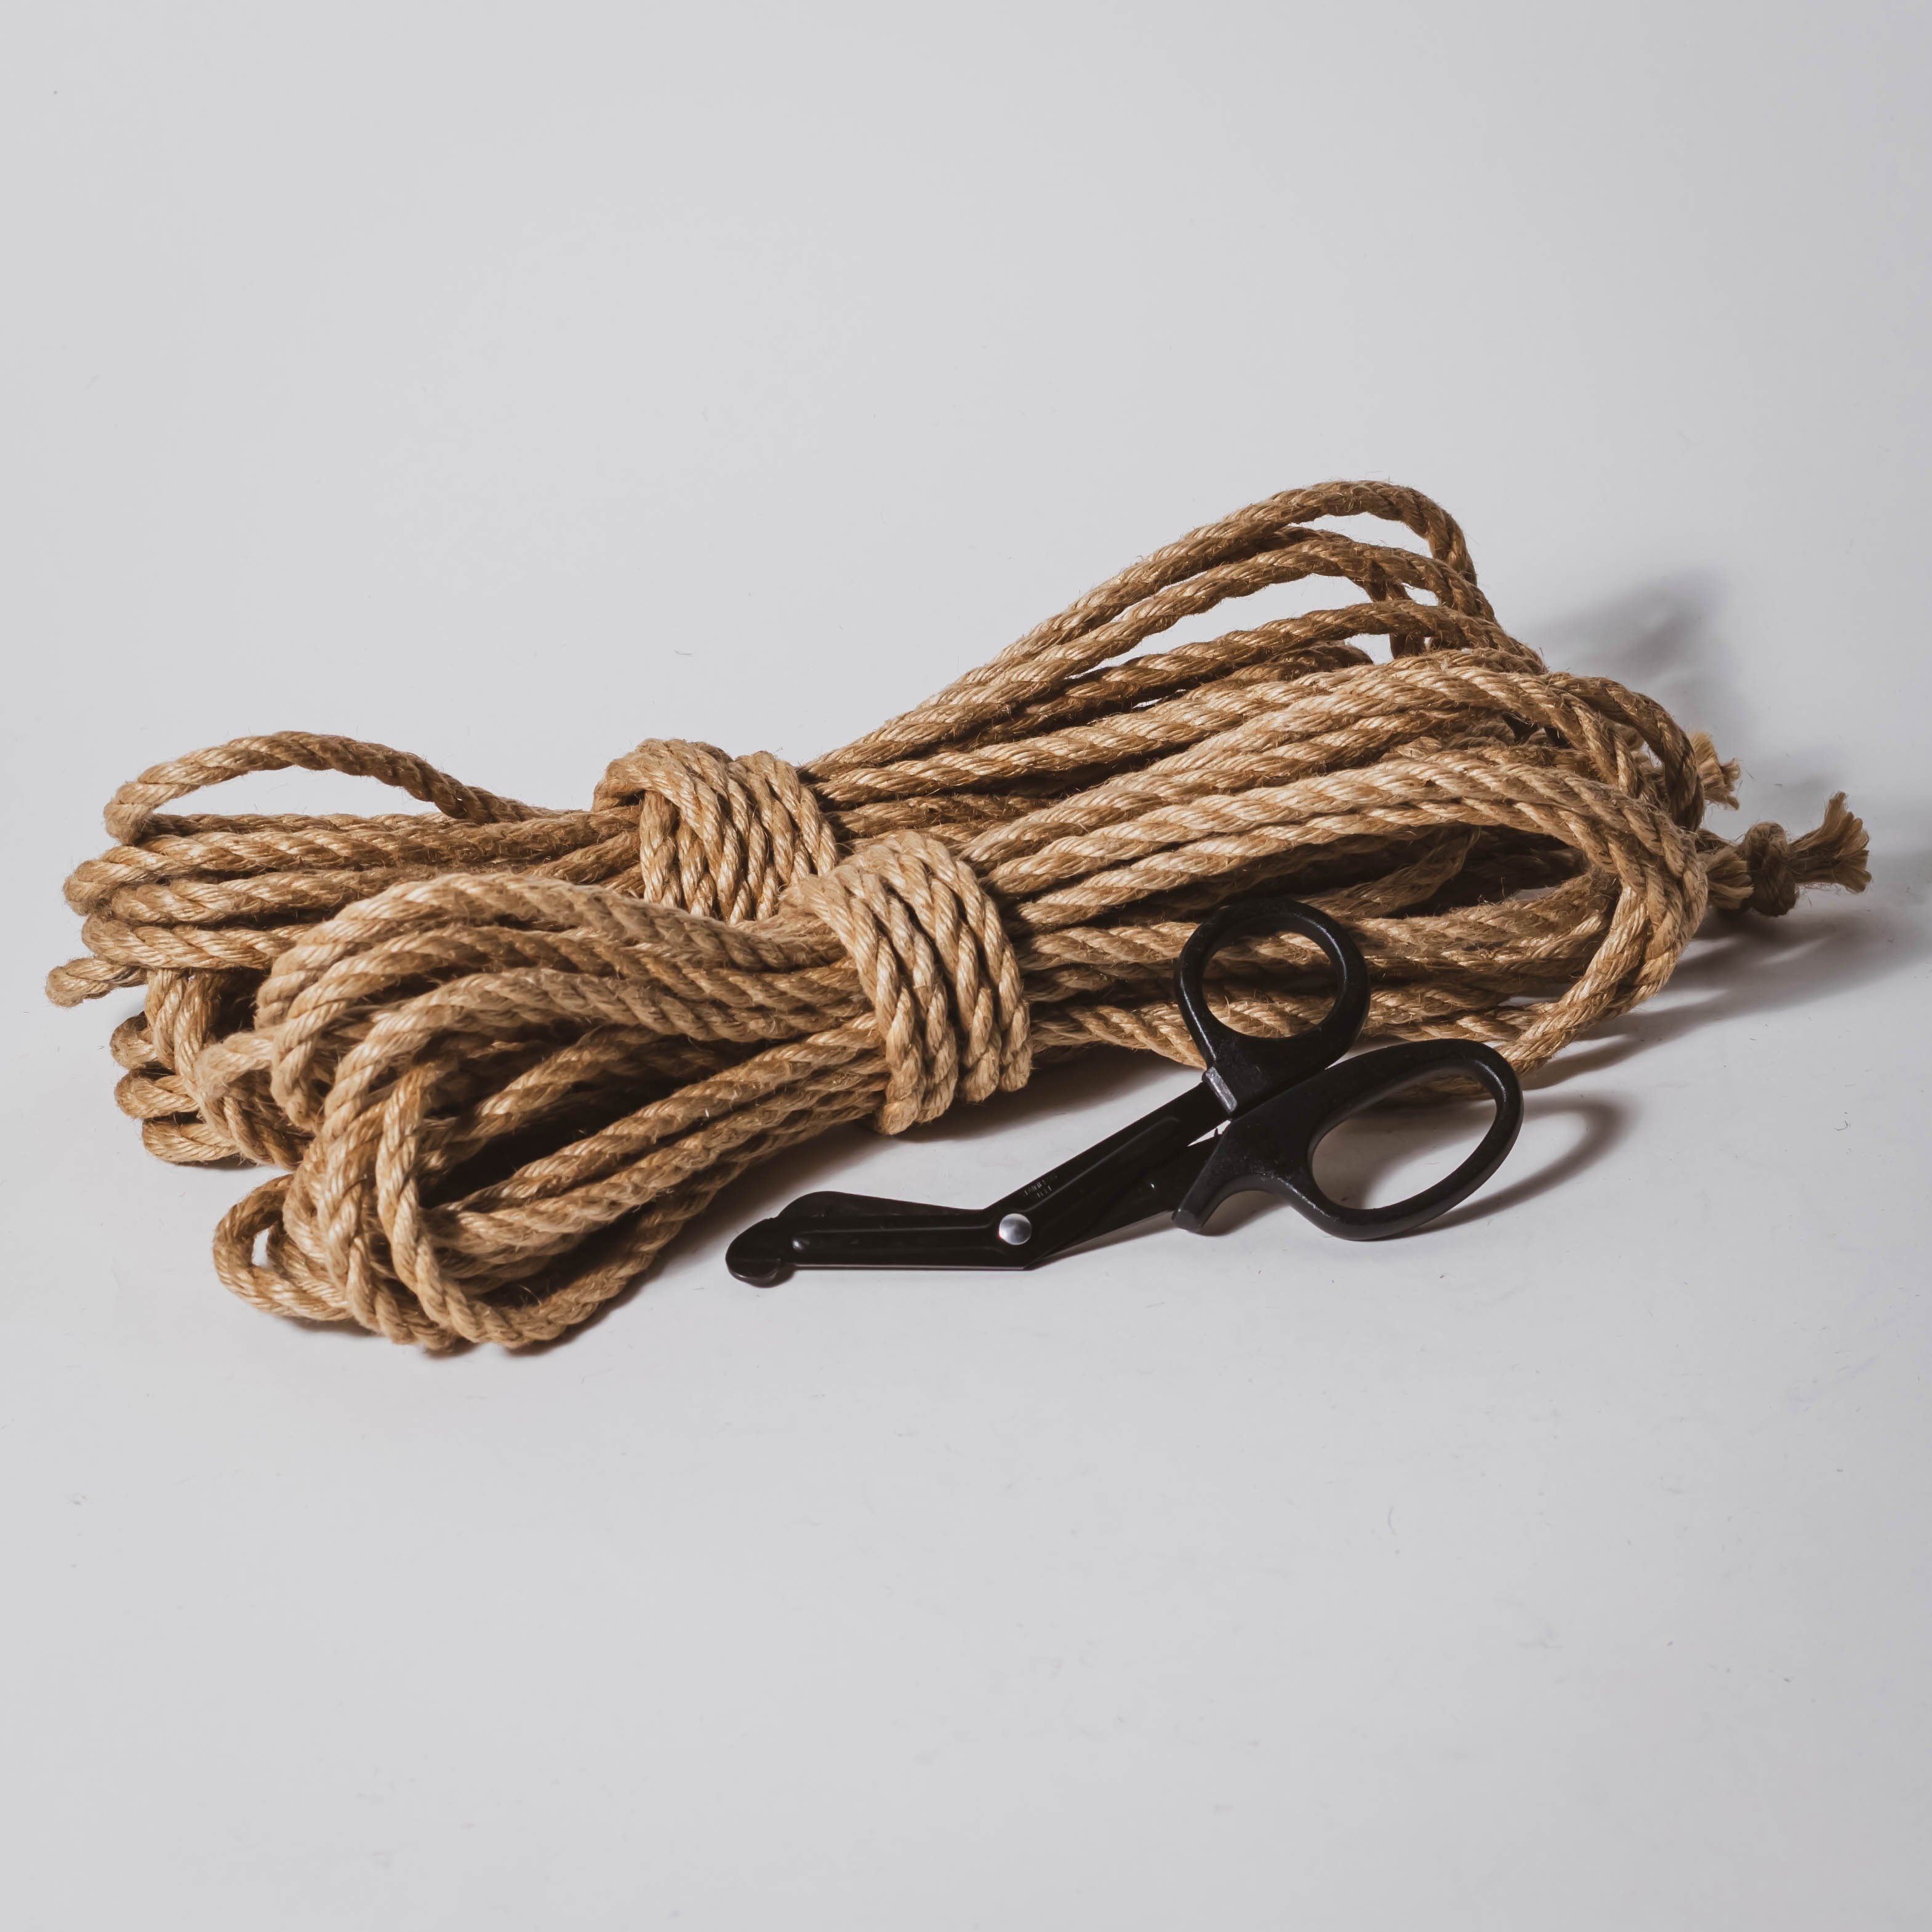 First Jute Rope Kit for Shibari